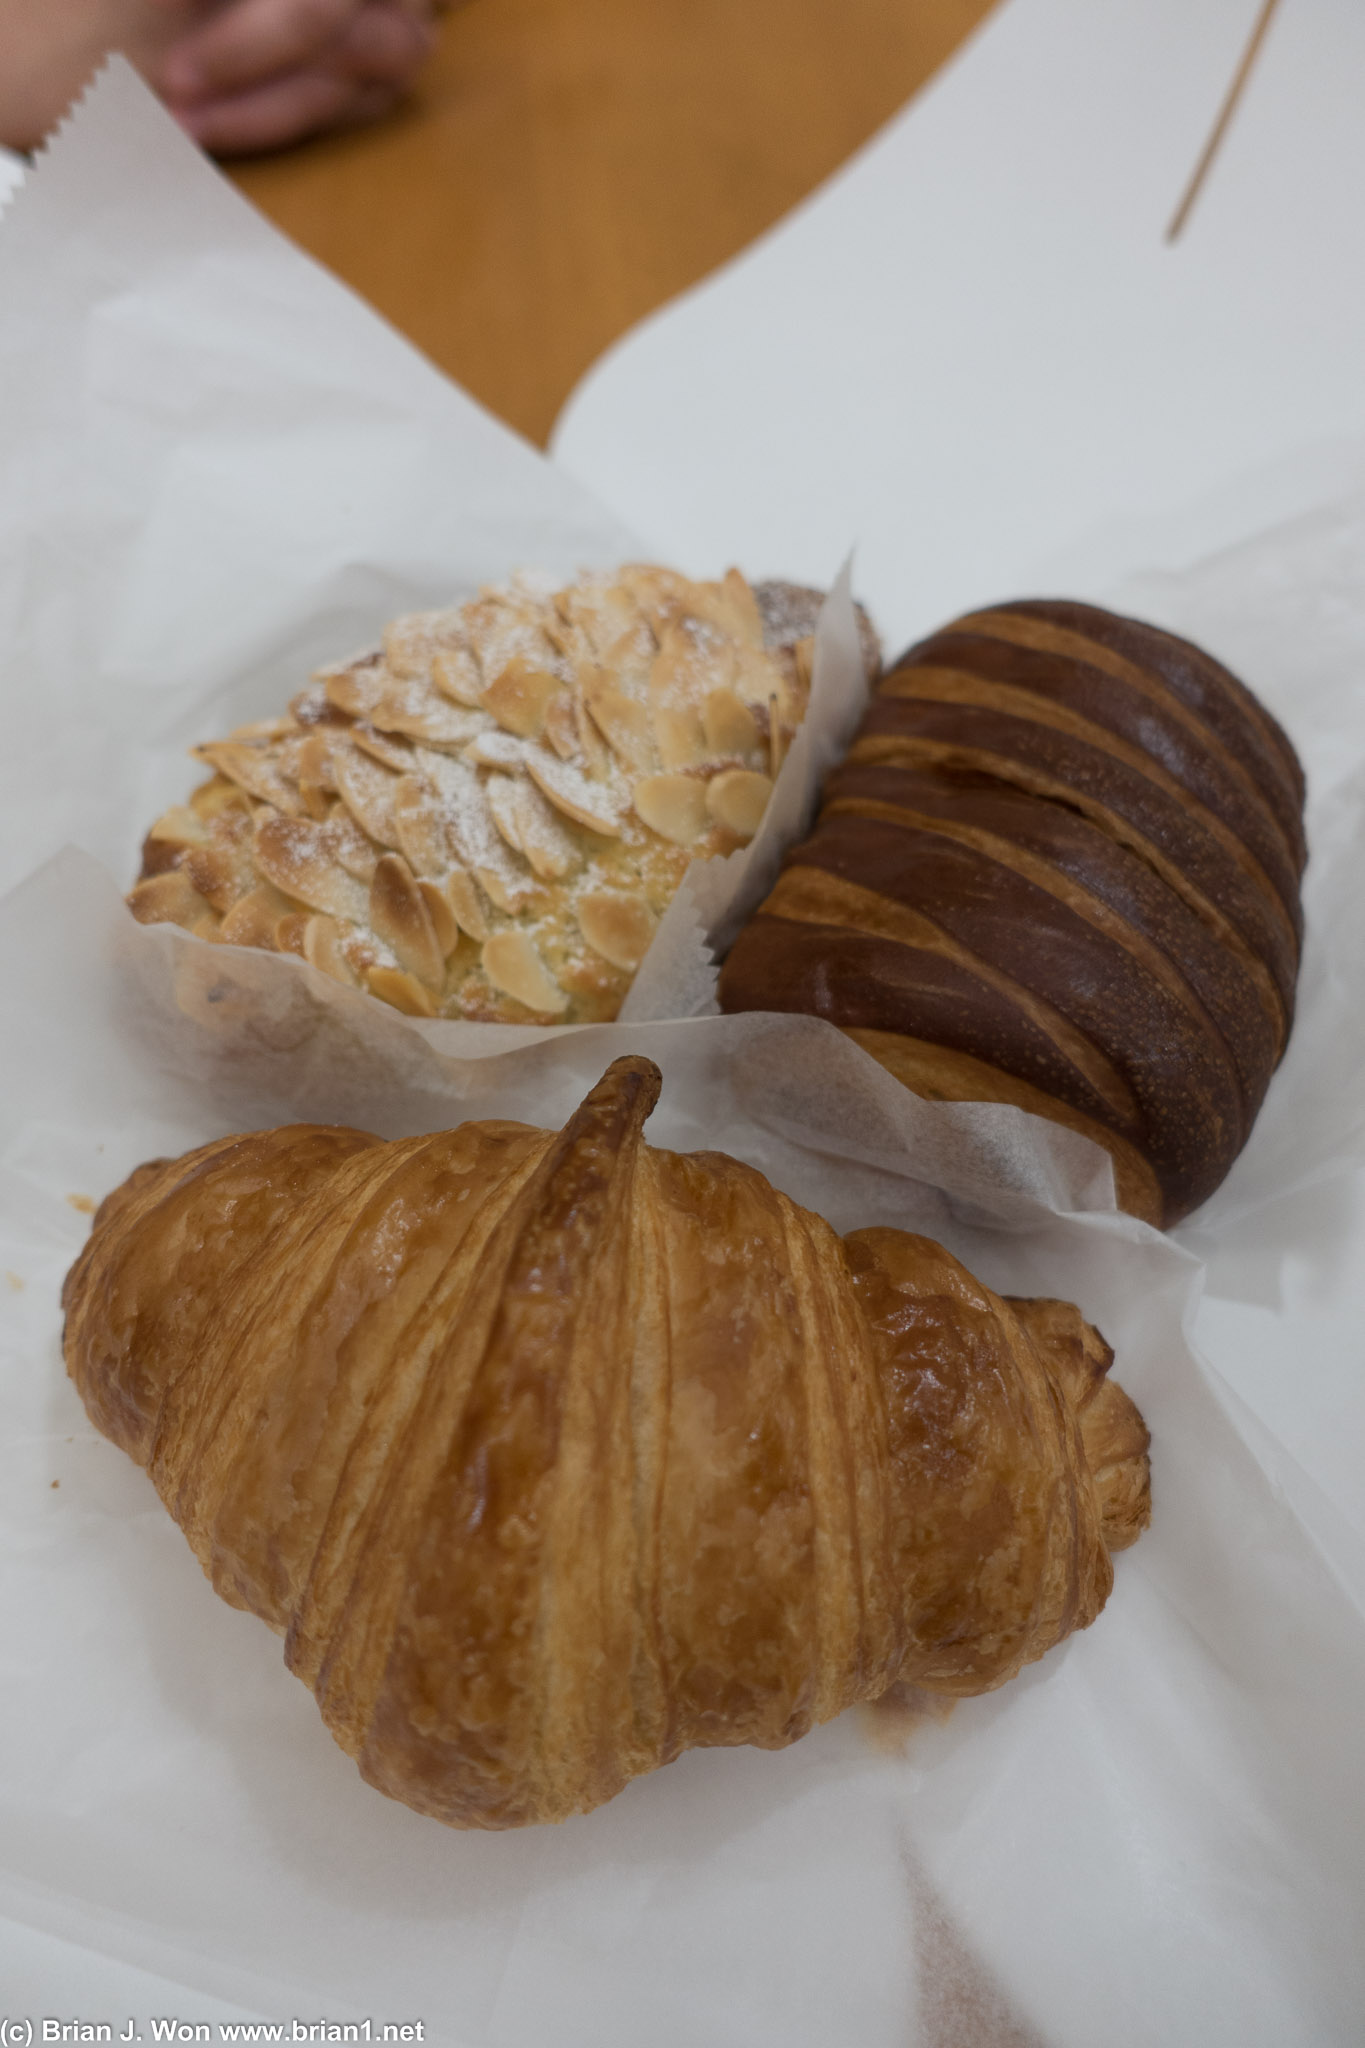 Plain, almond, and chocolate croissants.